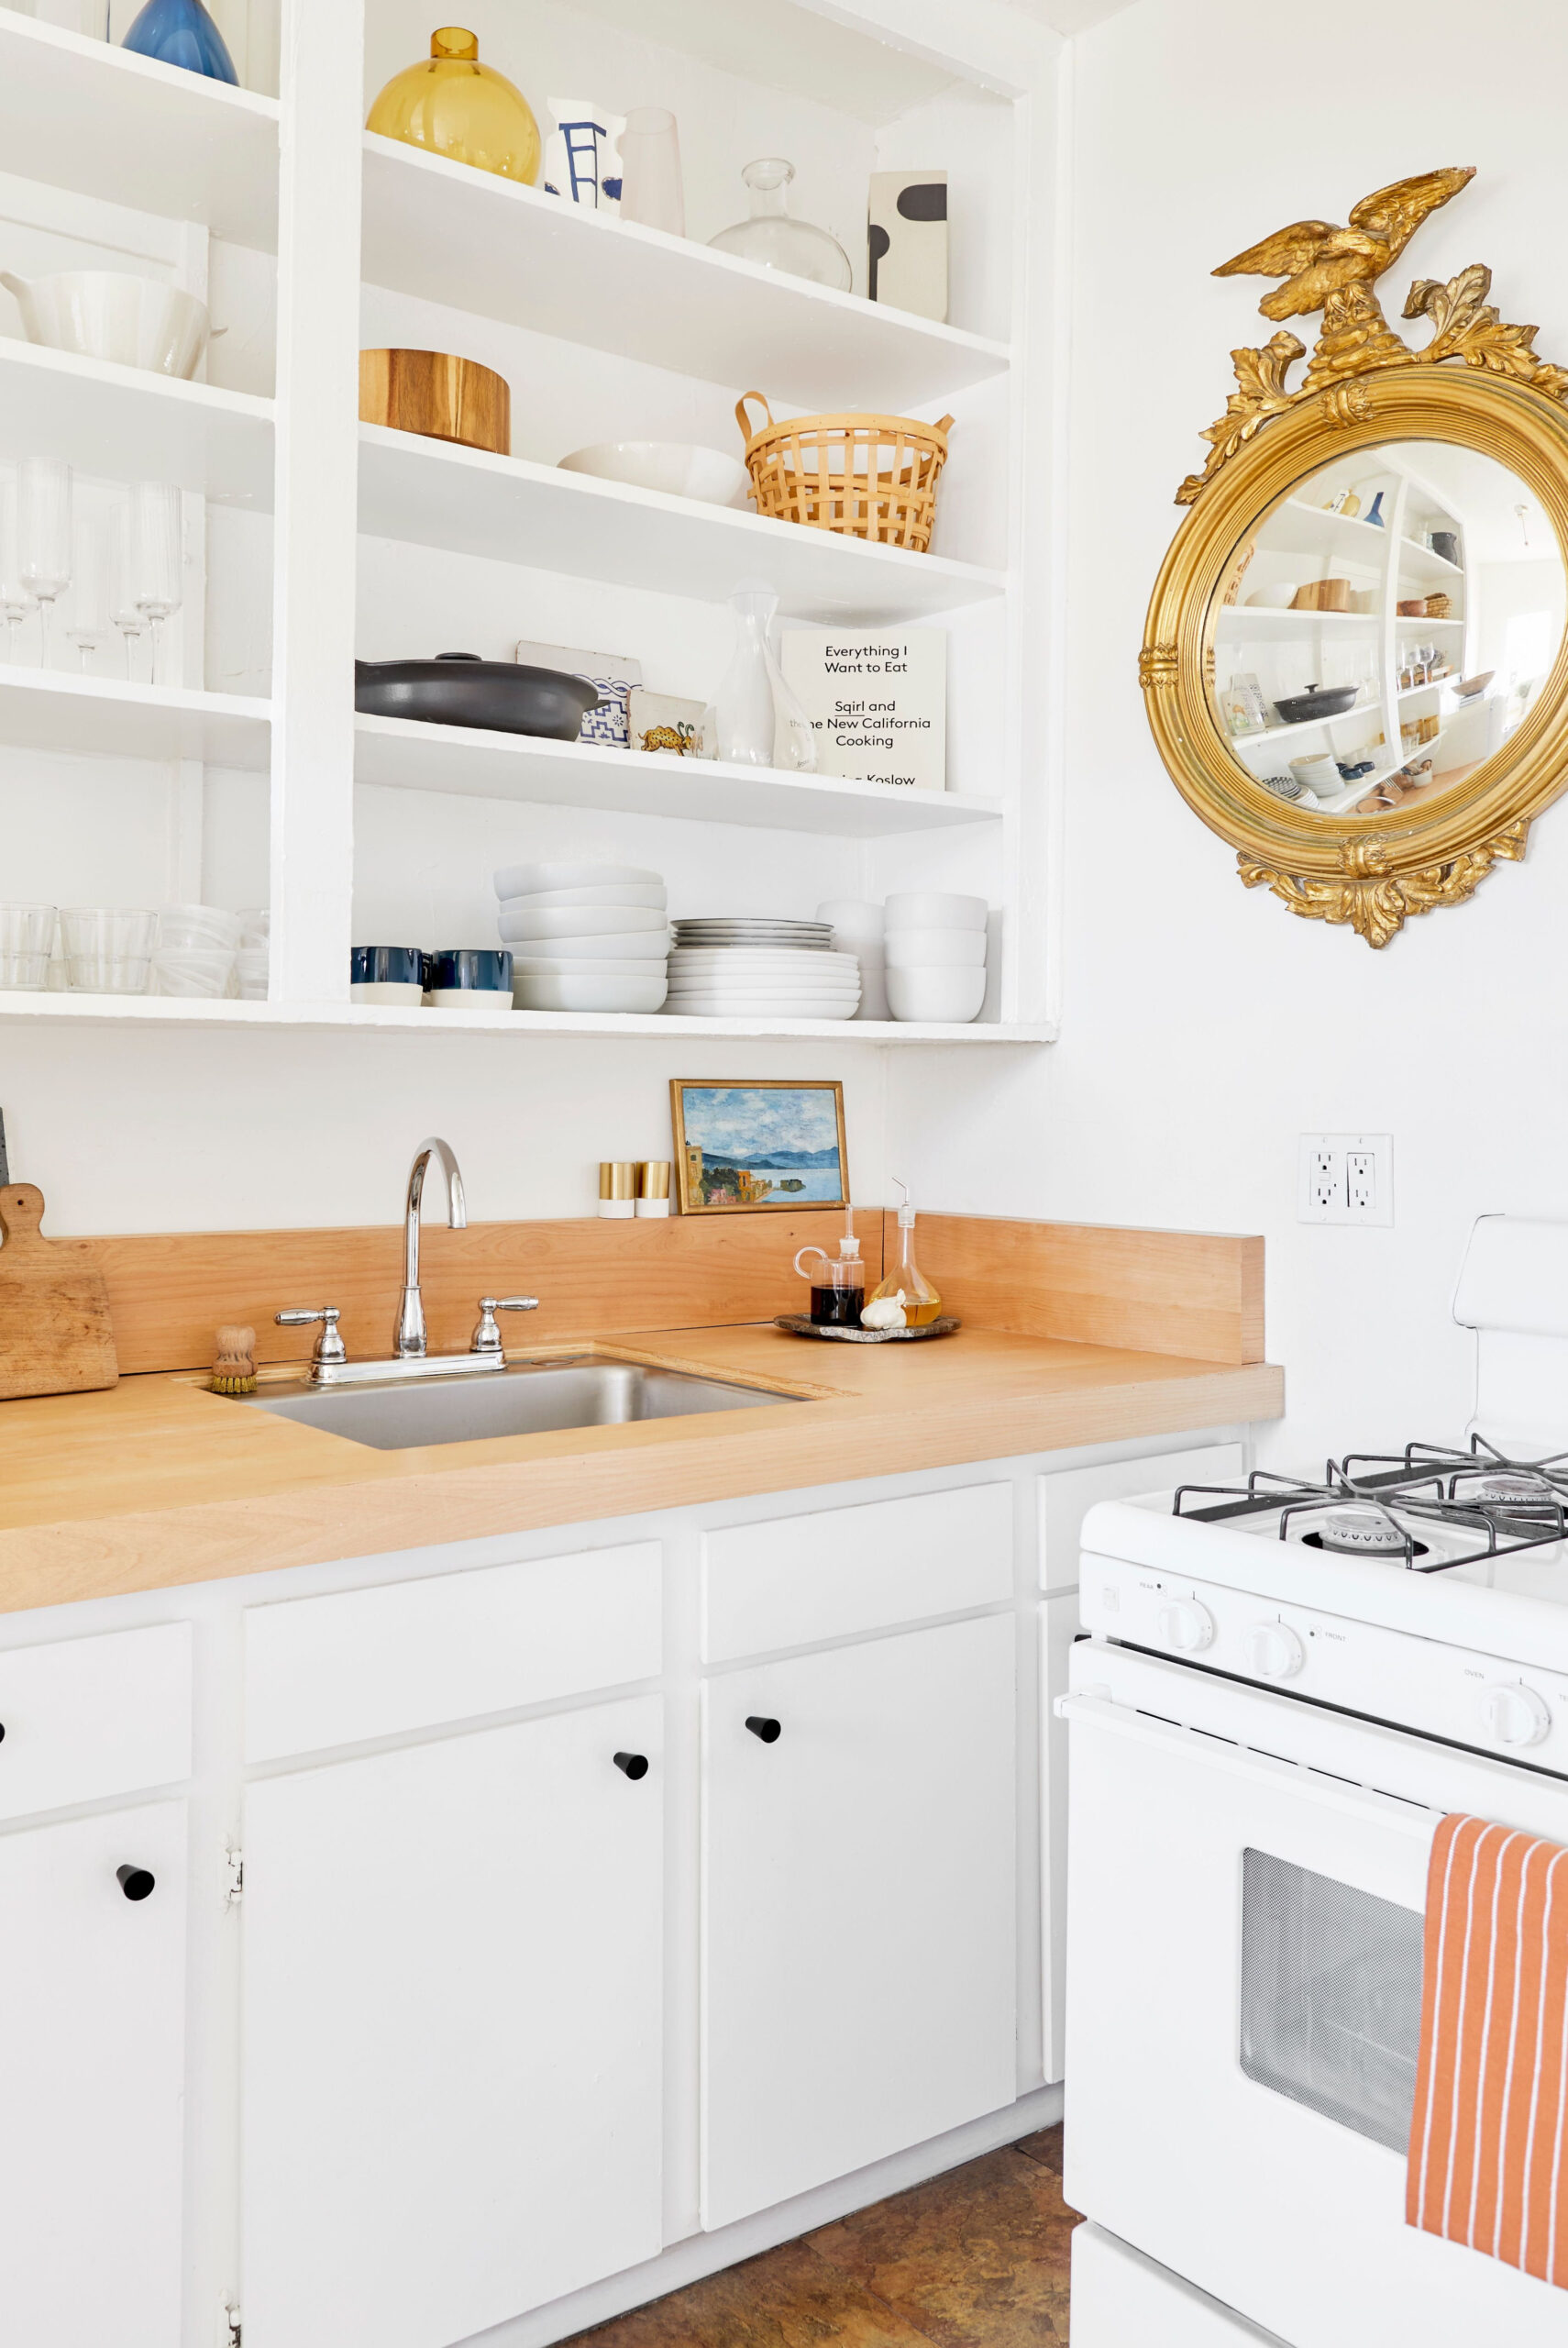 Best Small Kitchen Design Ideas - Small Kitchen Layout Photos